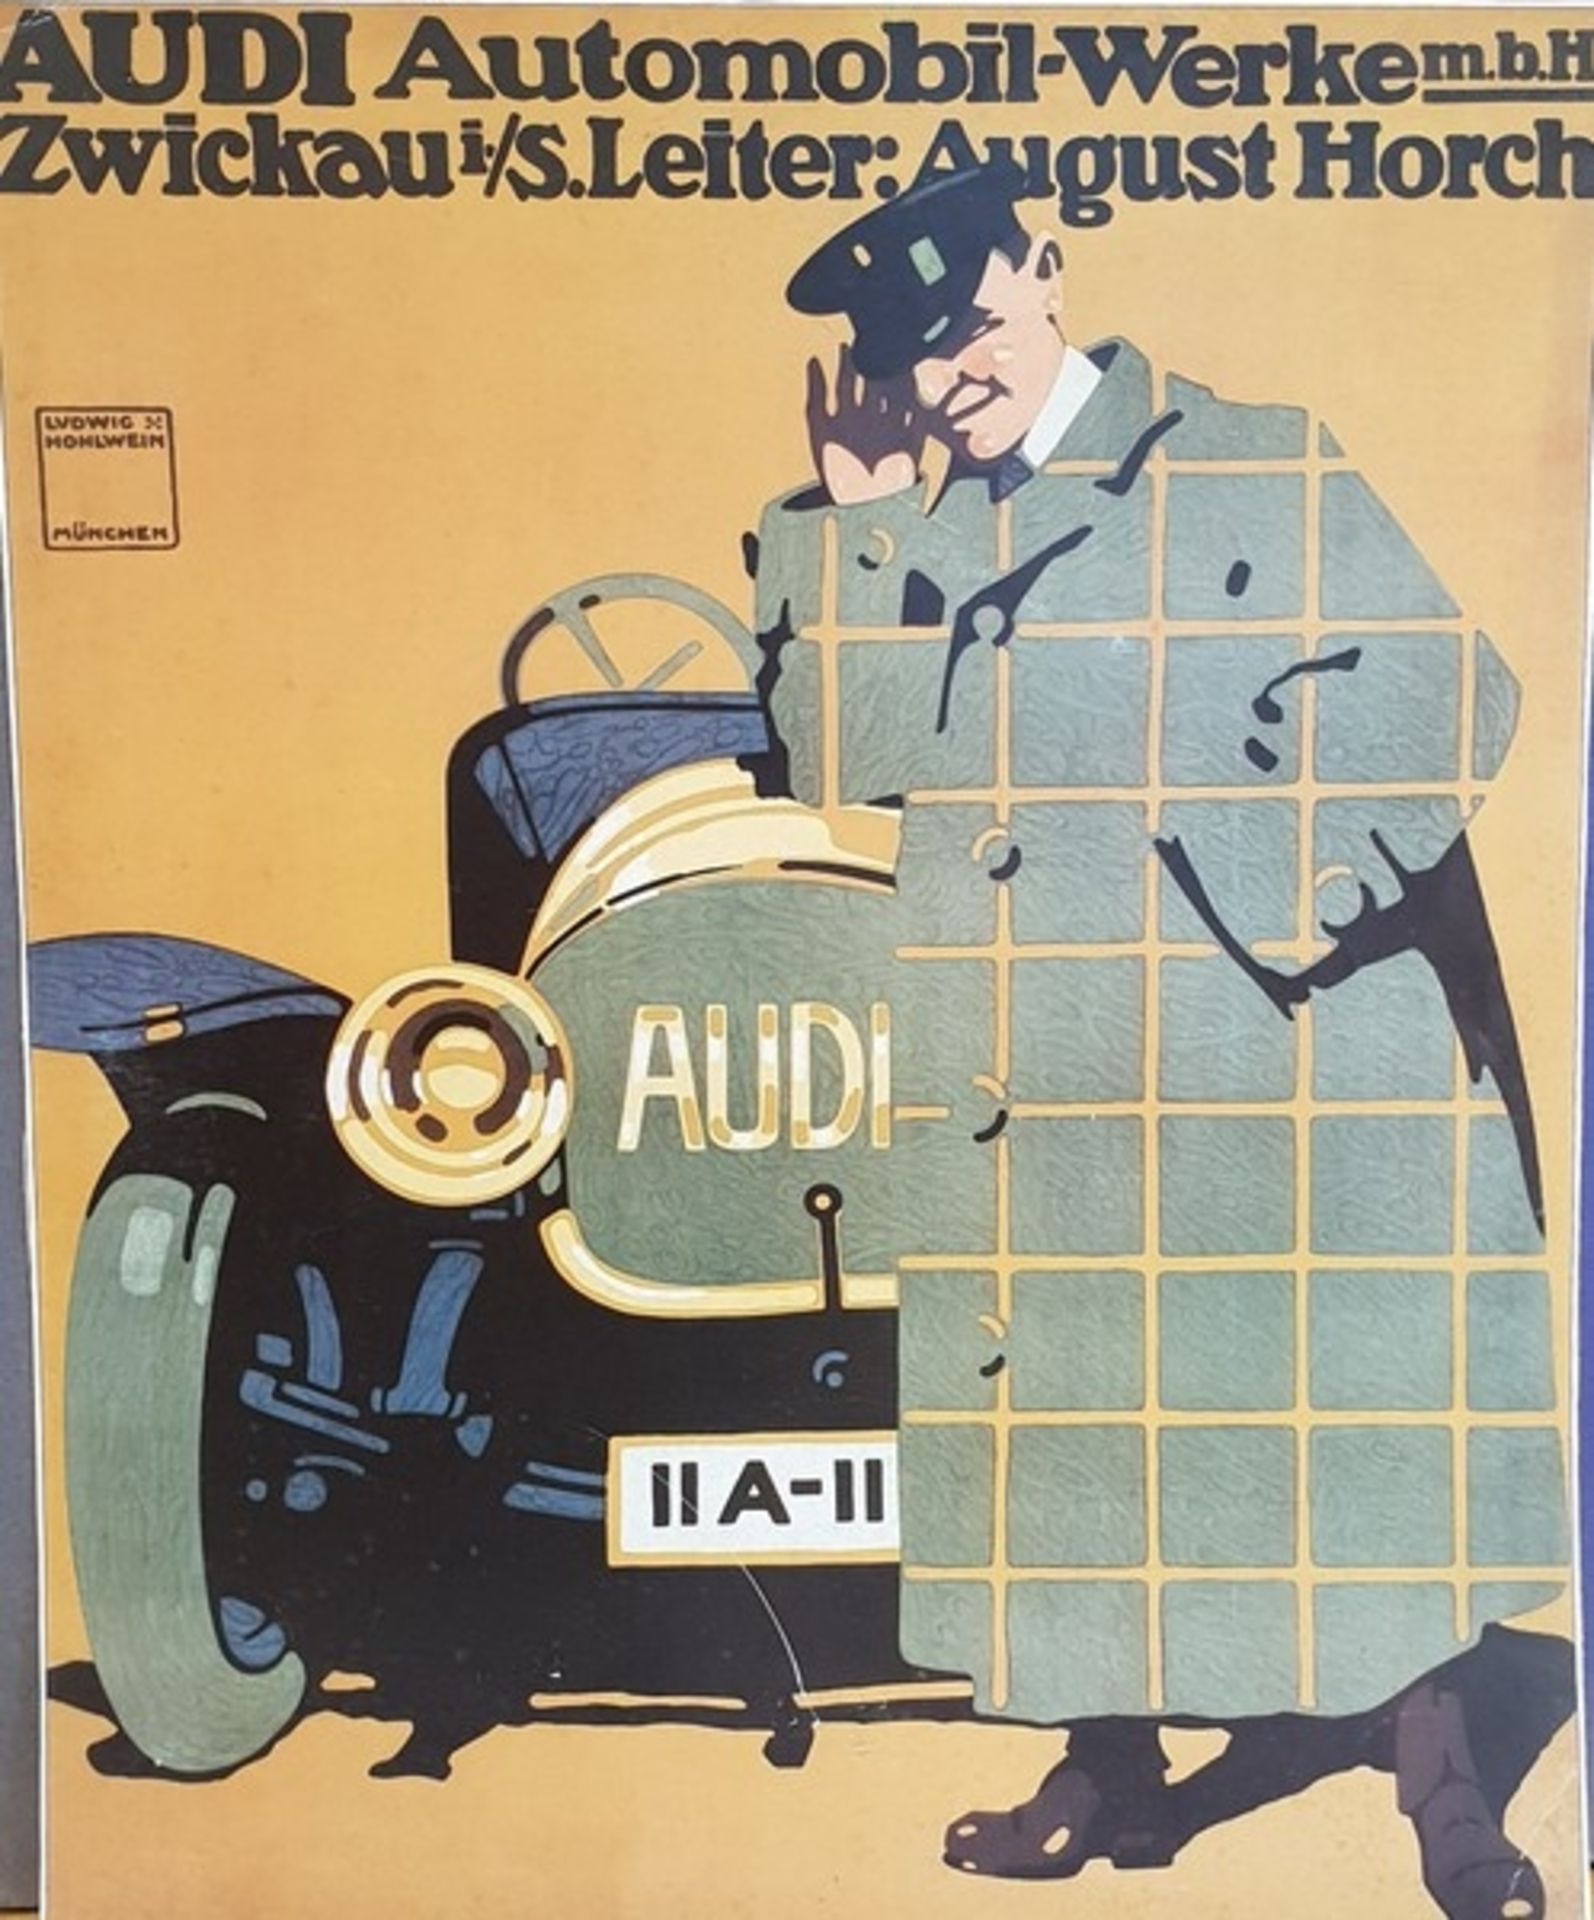 Audi Automobil- Werke m.b.H Zwickau, frühe Plakat Reproduktion, teilweise beschädigt und besch